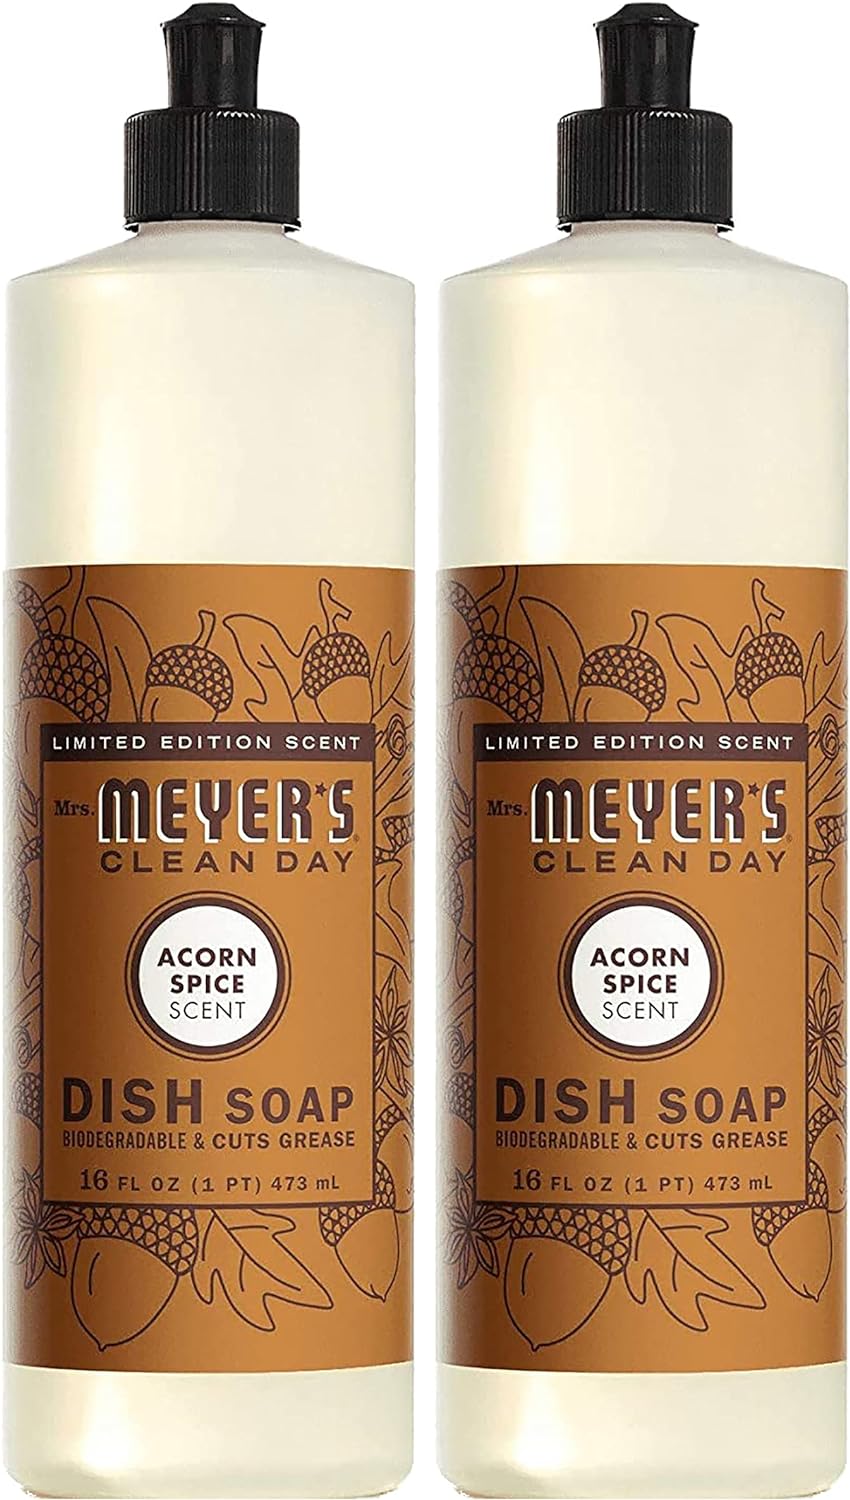 Mrs. Meyer’s Liquid Dish Soap, Acorn Spice Scent, 12 FL OZ Bottle (Pack of 2)